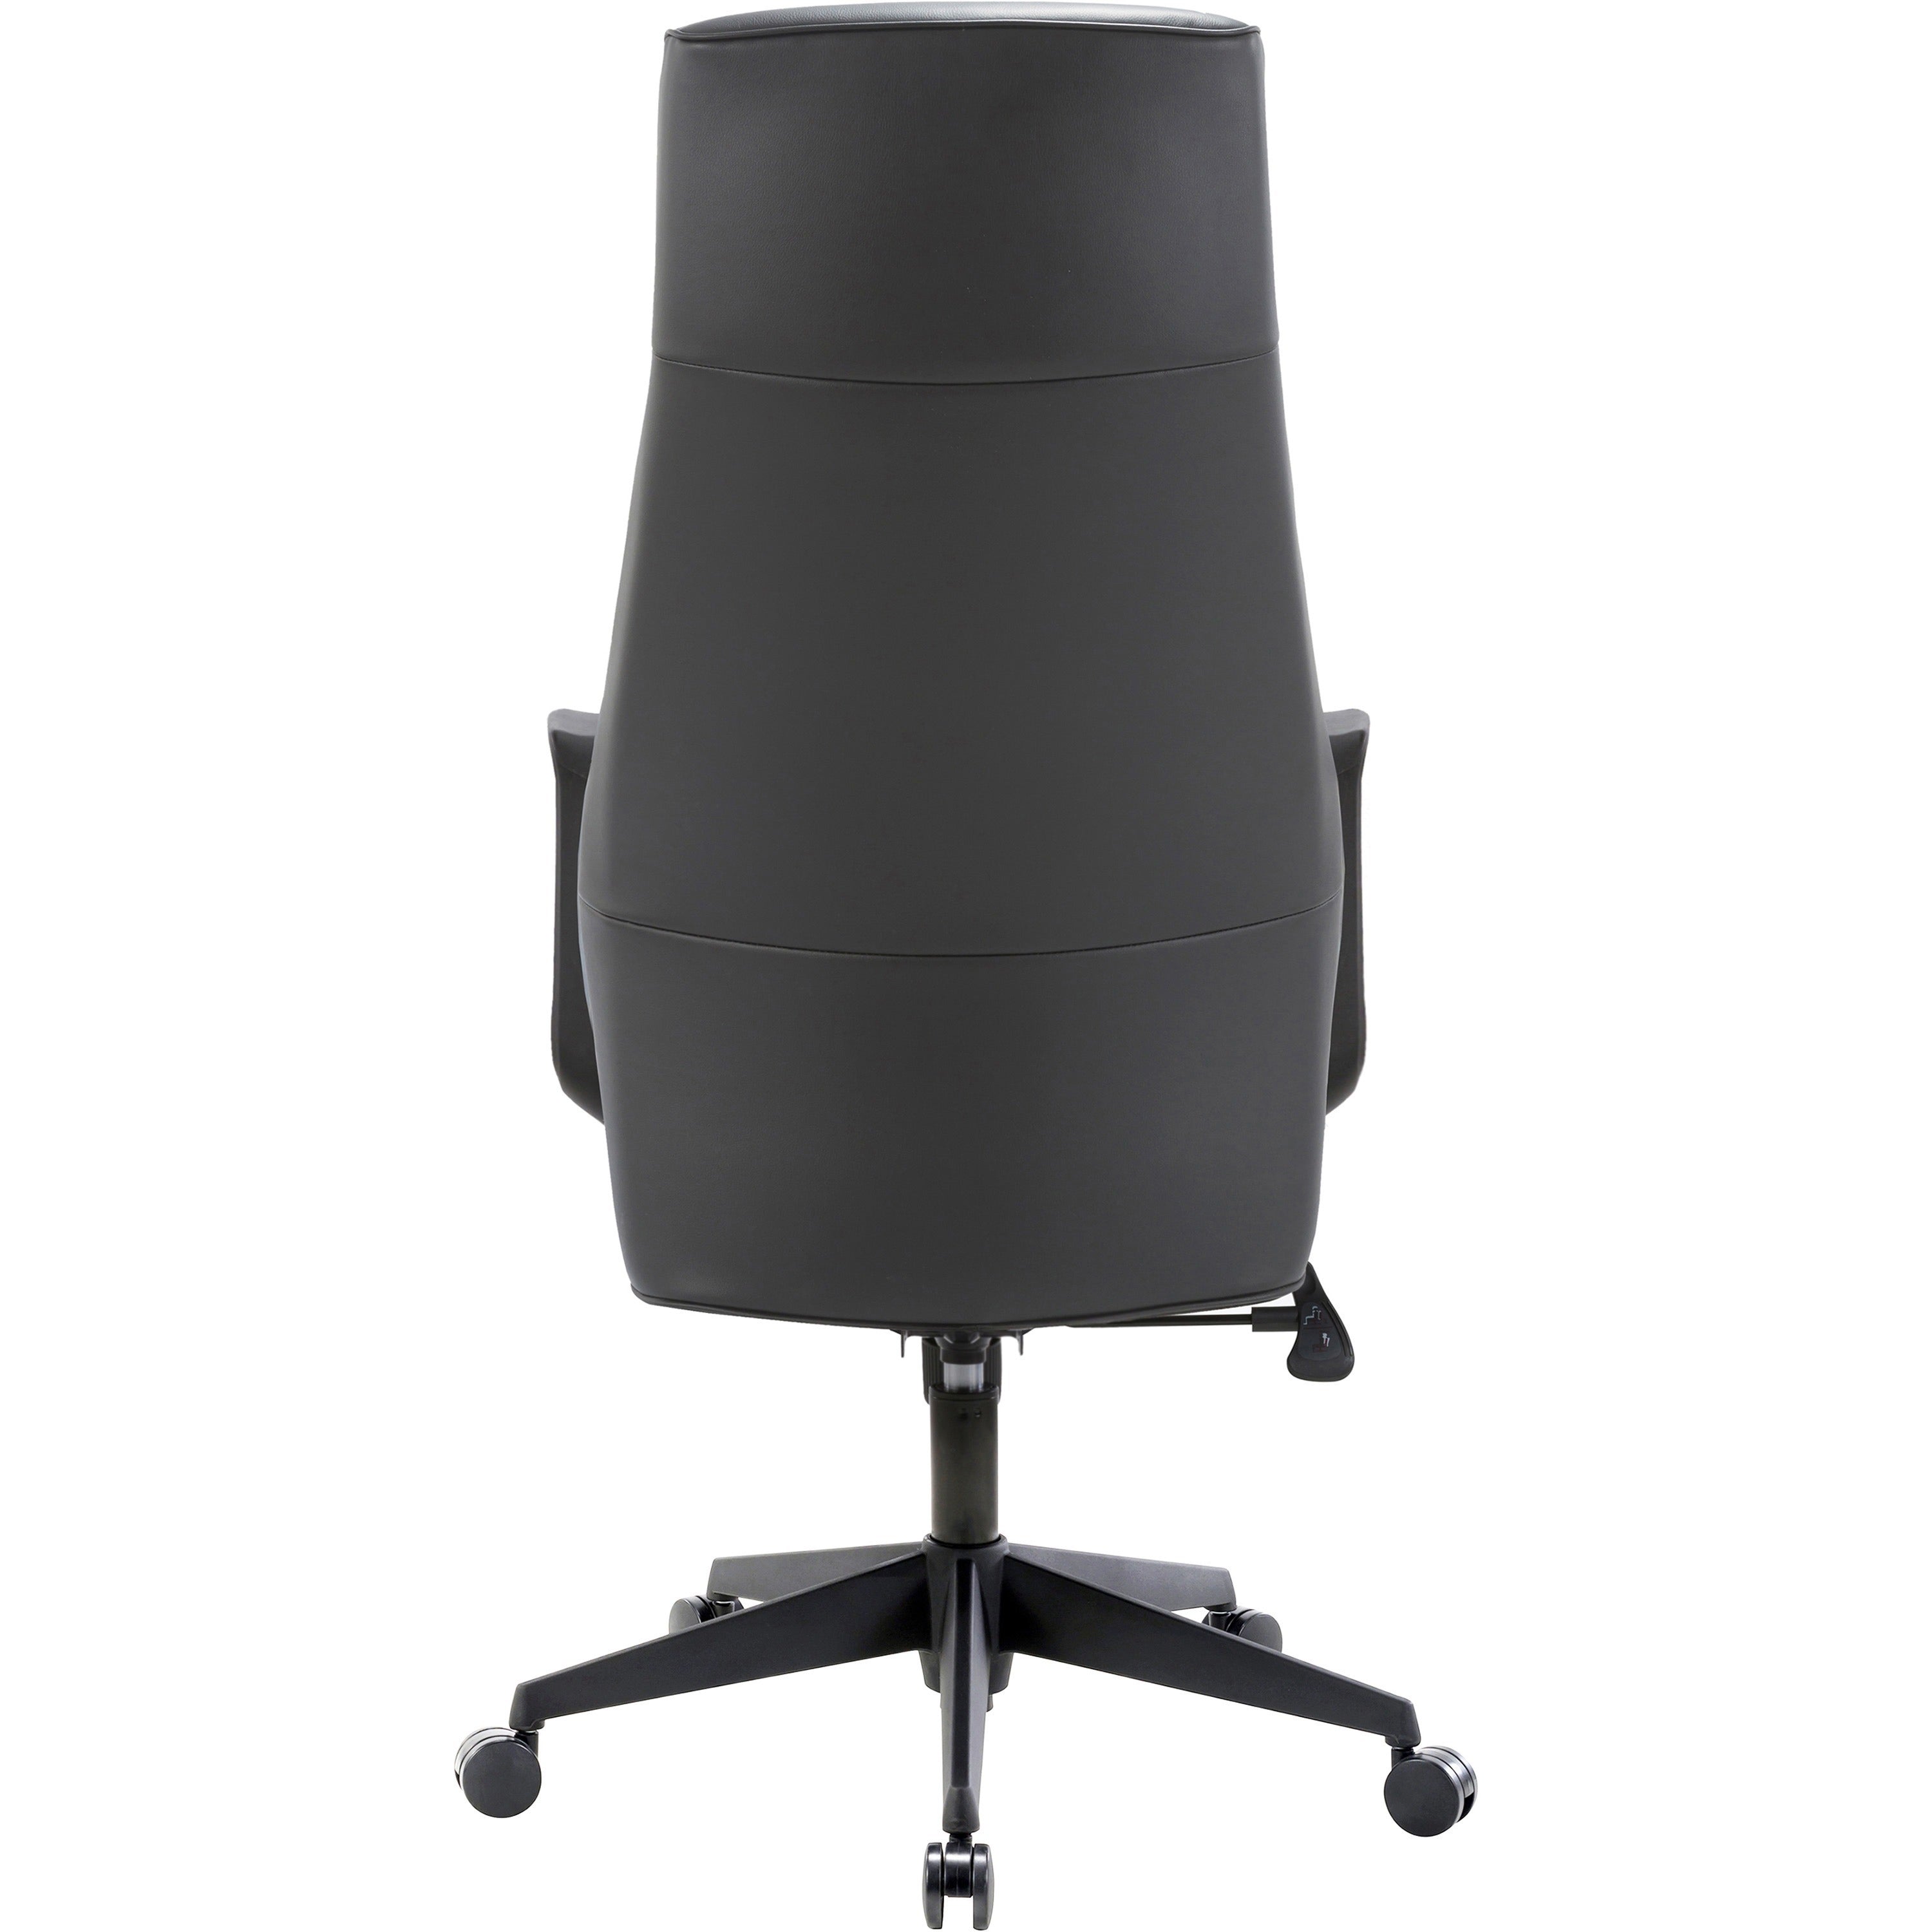 lys-high-back-bonded-leather-chair-black-bonded-leather-seat-black-bonded-leather-back-high-back-armrest-1-each_lysch100labk - 5